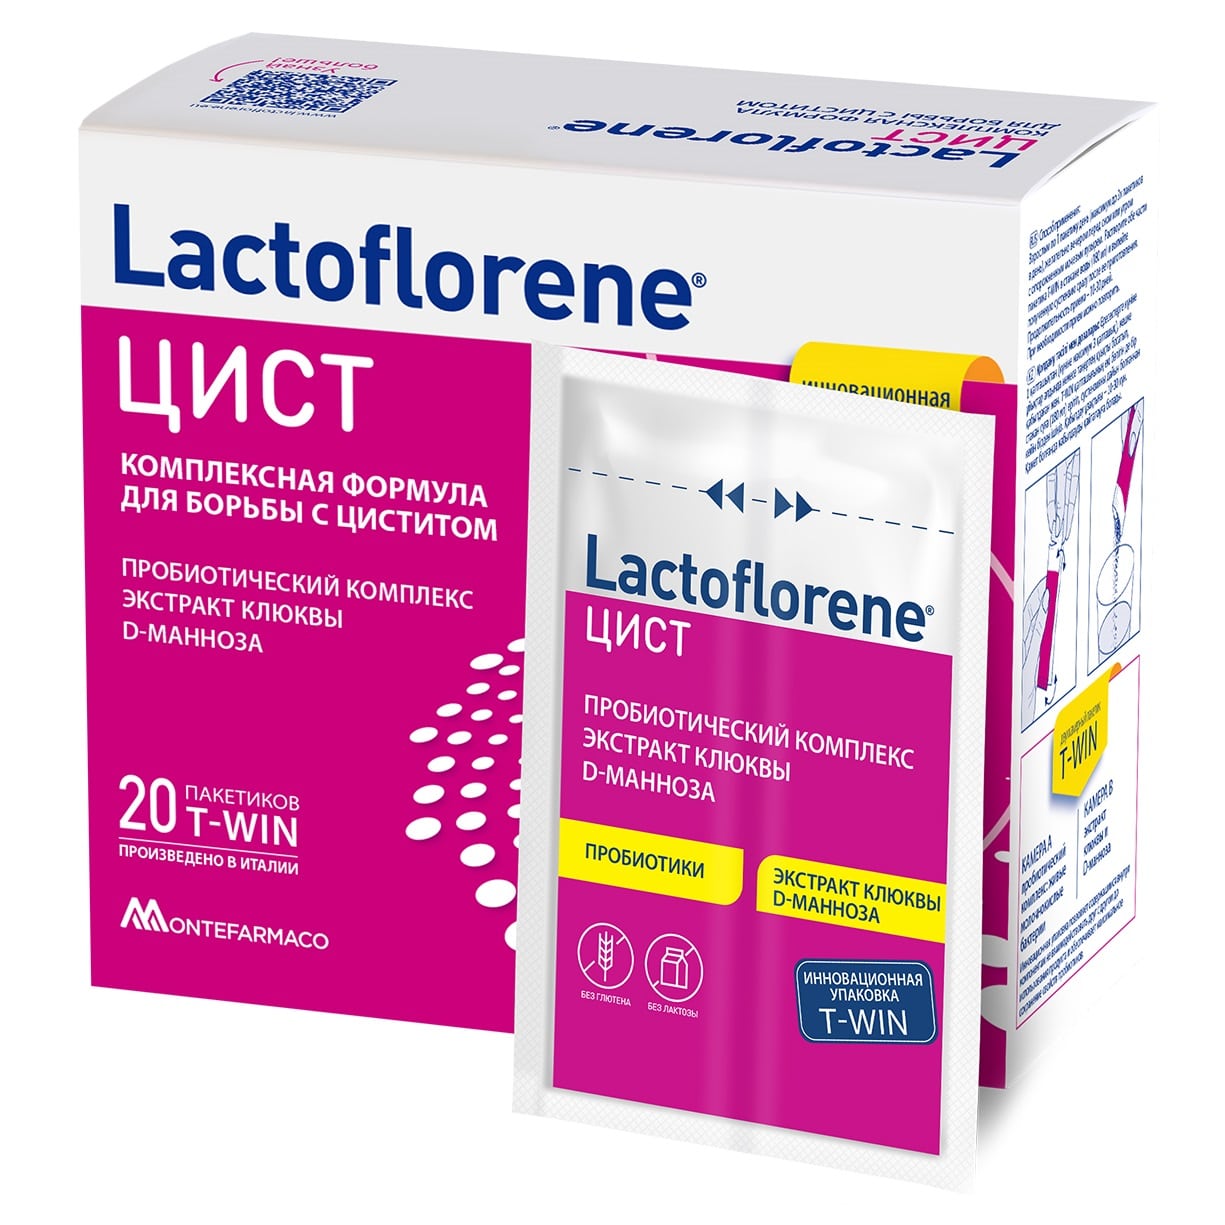 Lactoflorene Пробиотический комплекс Цист, 20 пакетиков (Lactoflorene, ) цена и фото